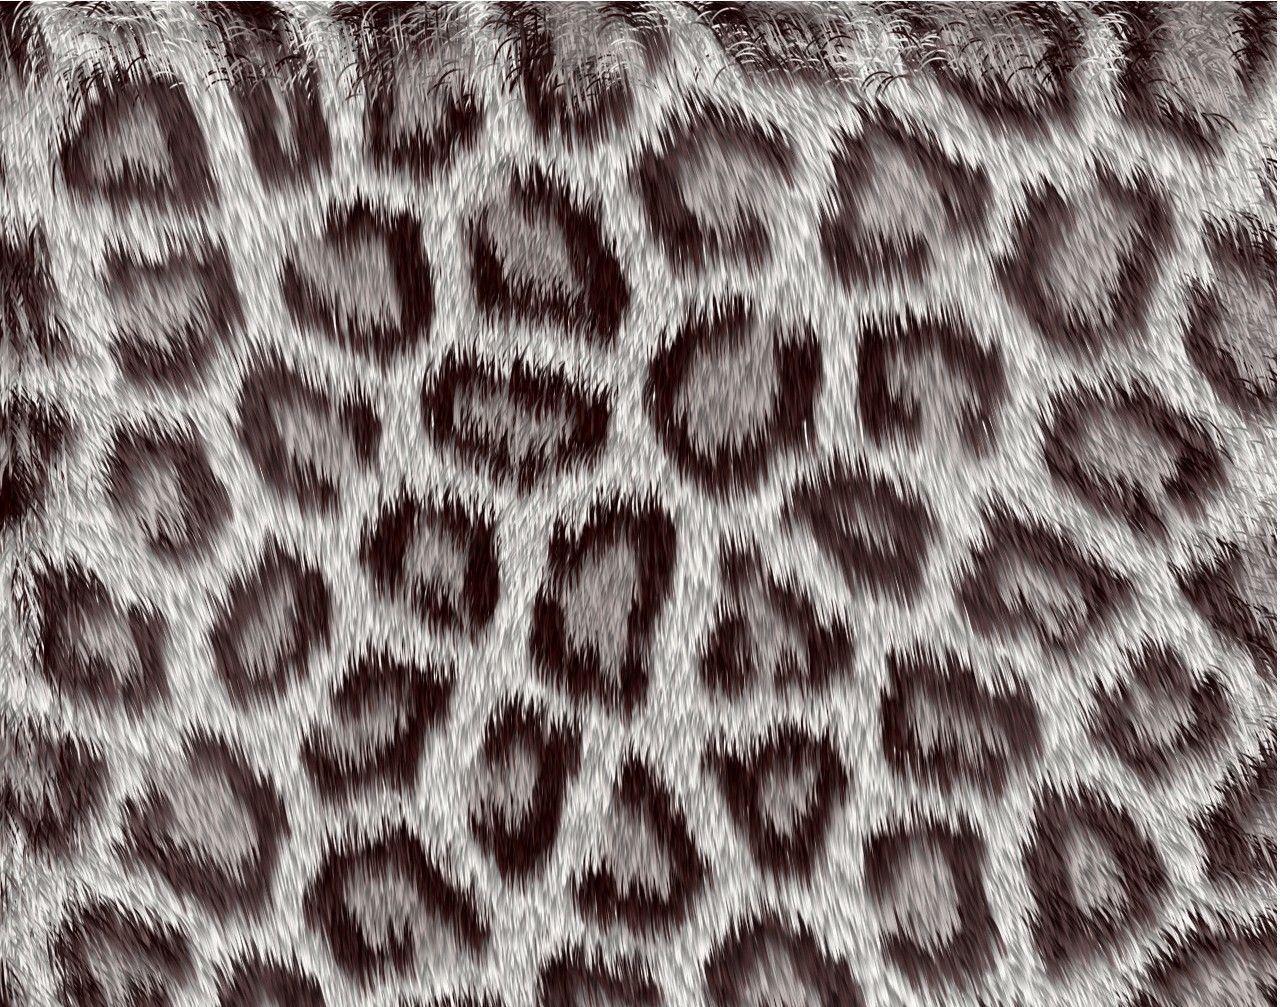 Animals For > Cheetah Background